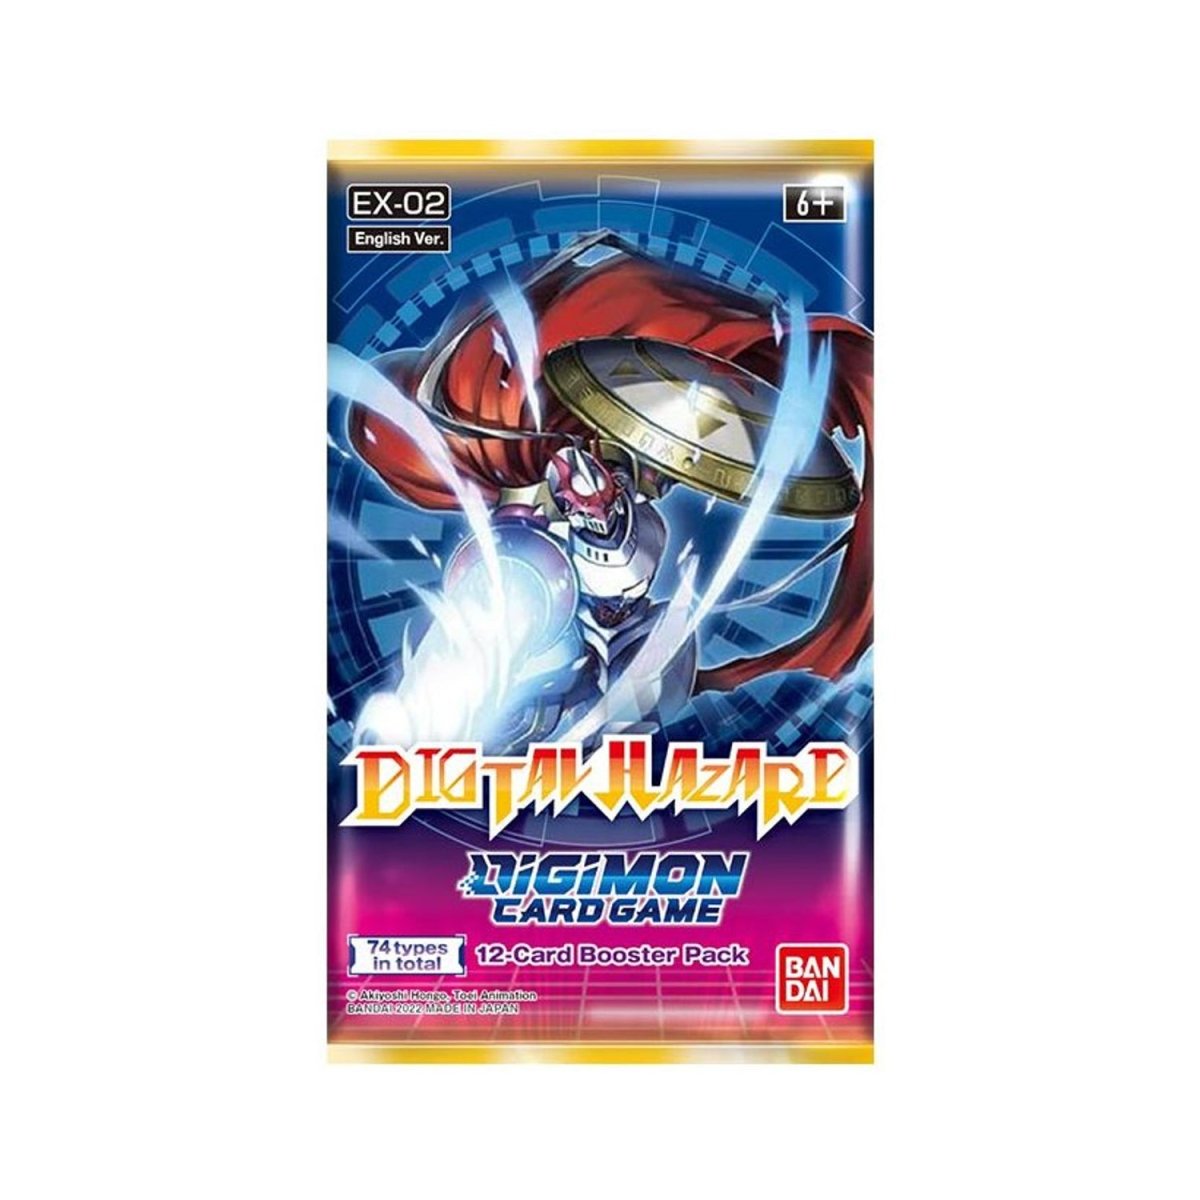 Digimon Card Game: Digital Hazard EX-02 - English Booster Pack - GameOn.games